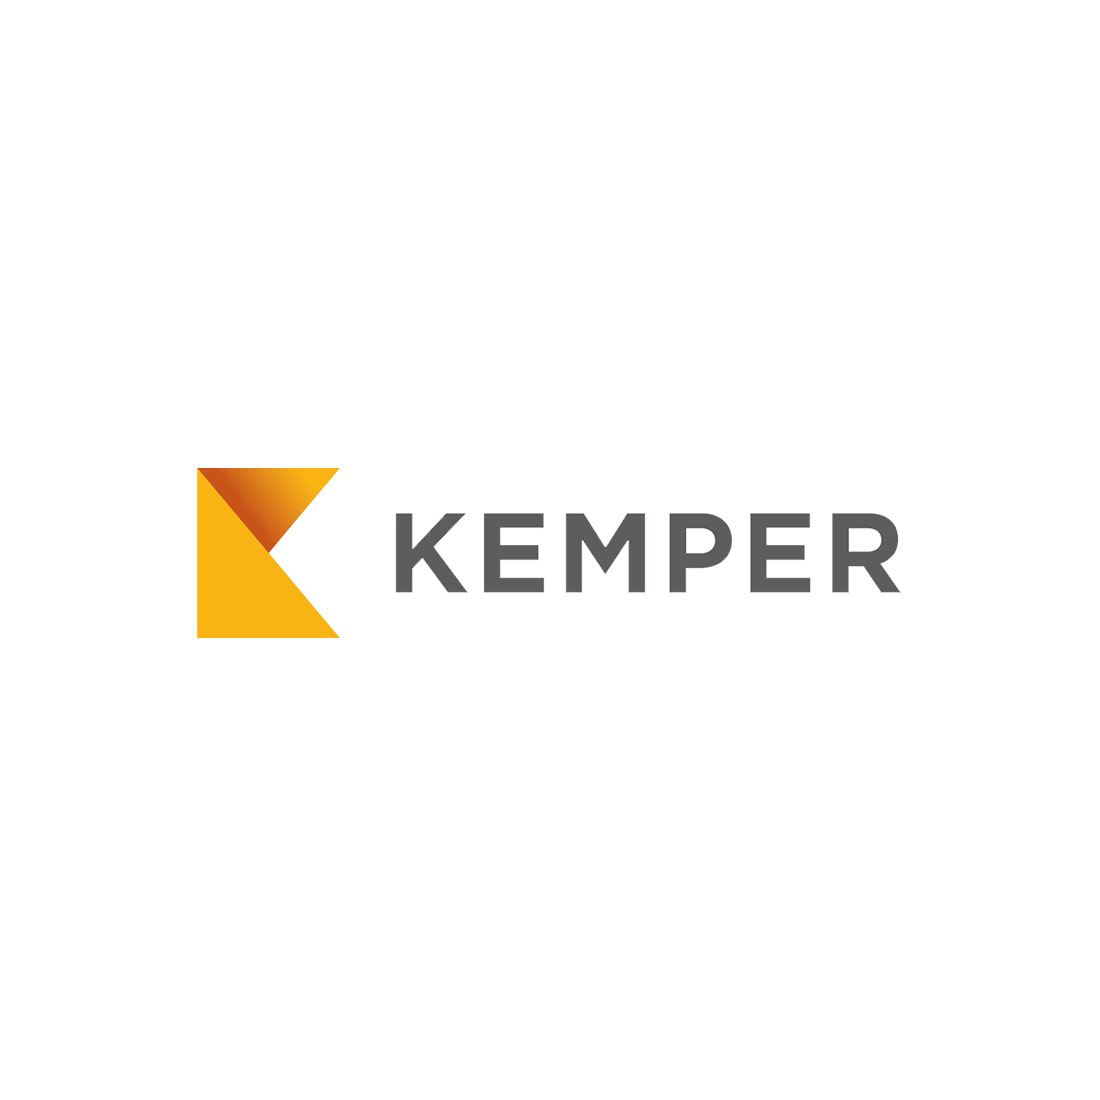 Kemper Insurance